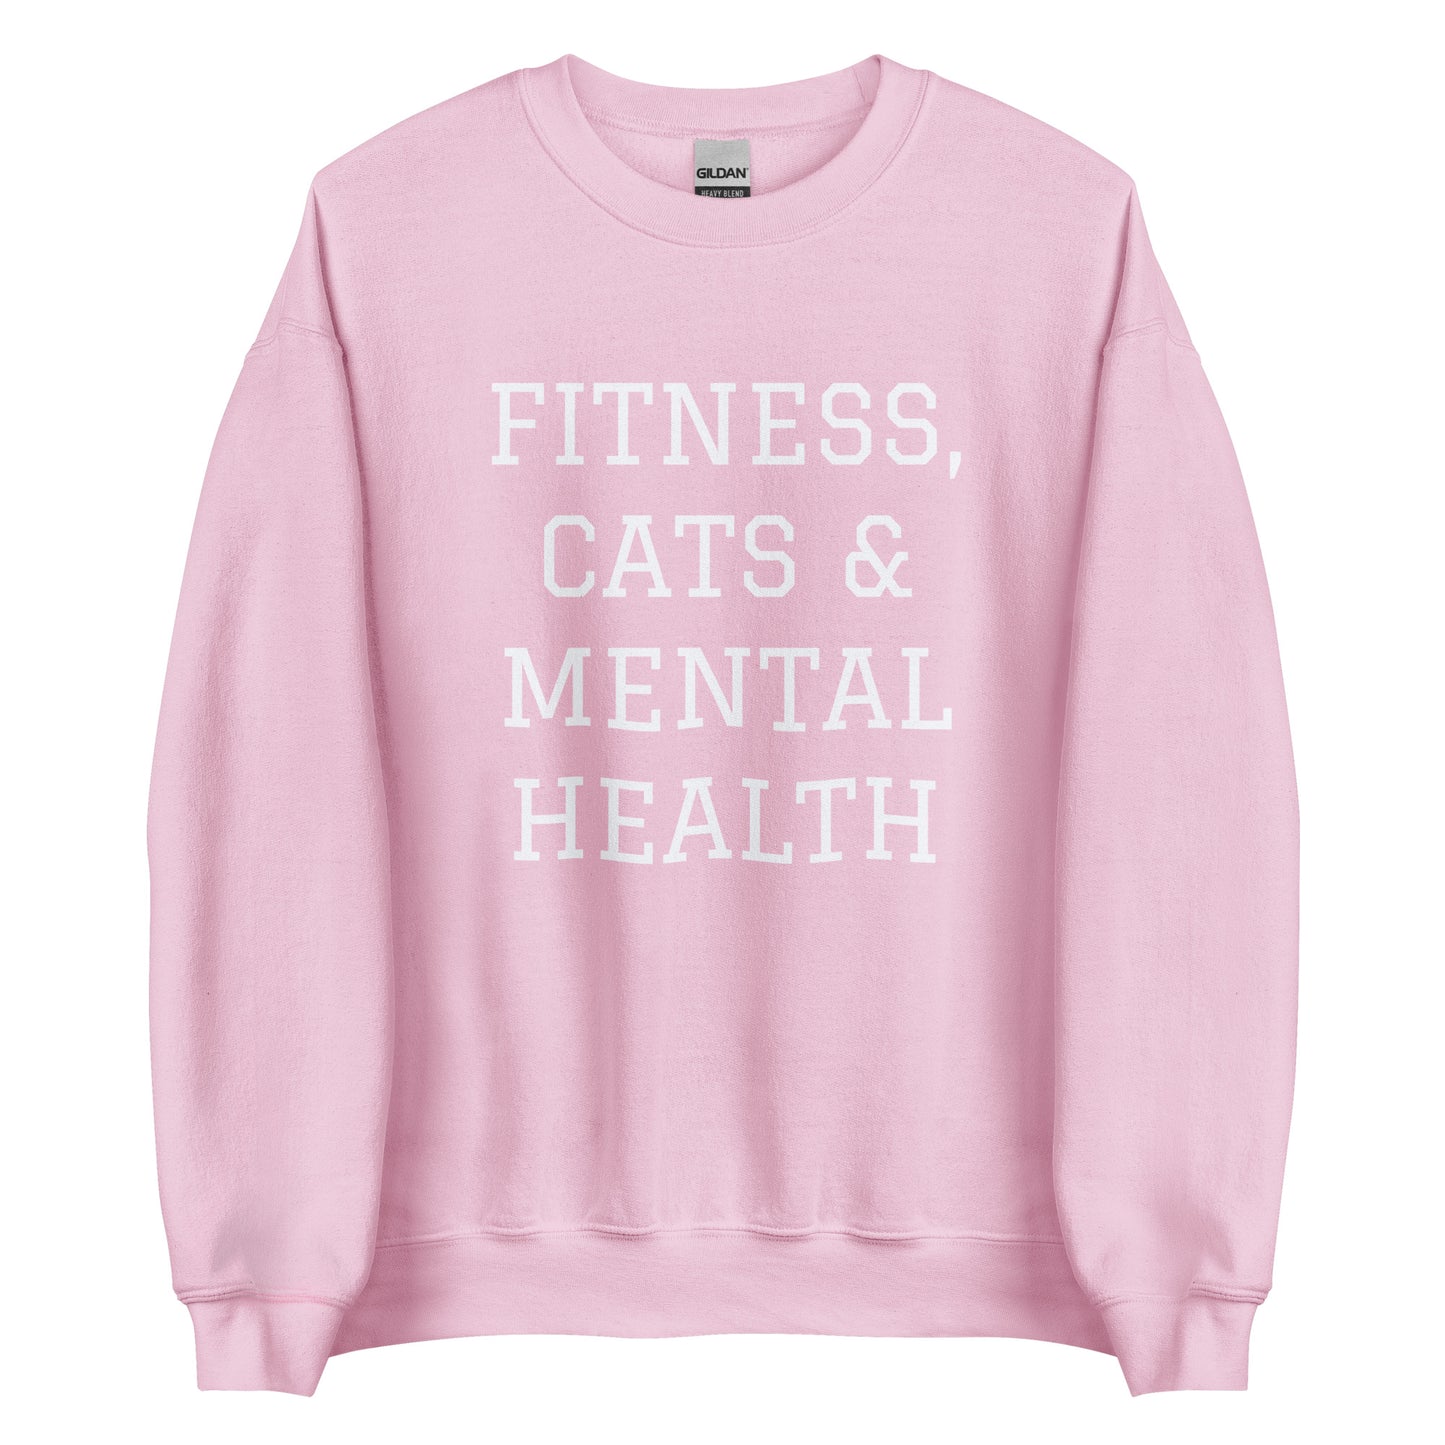 Fitness, Cats & Mental Health Sweatshirt